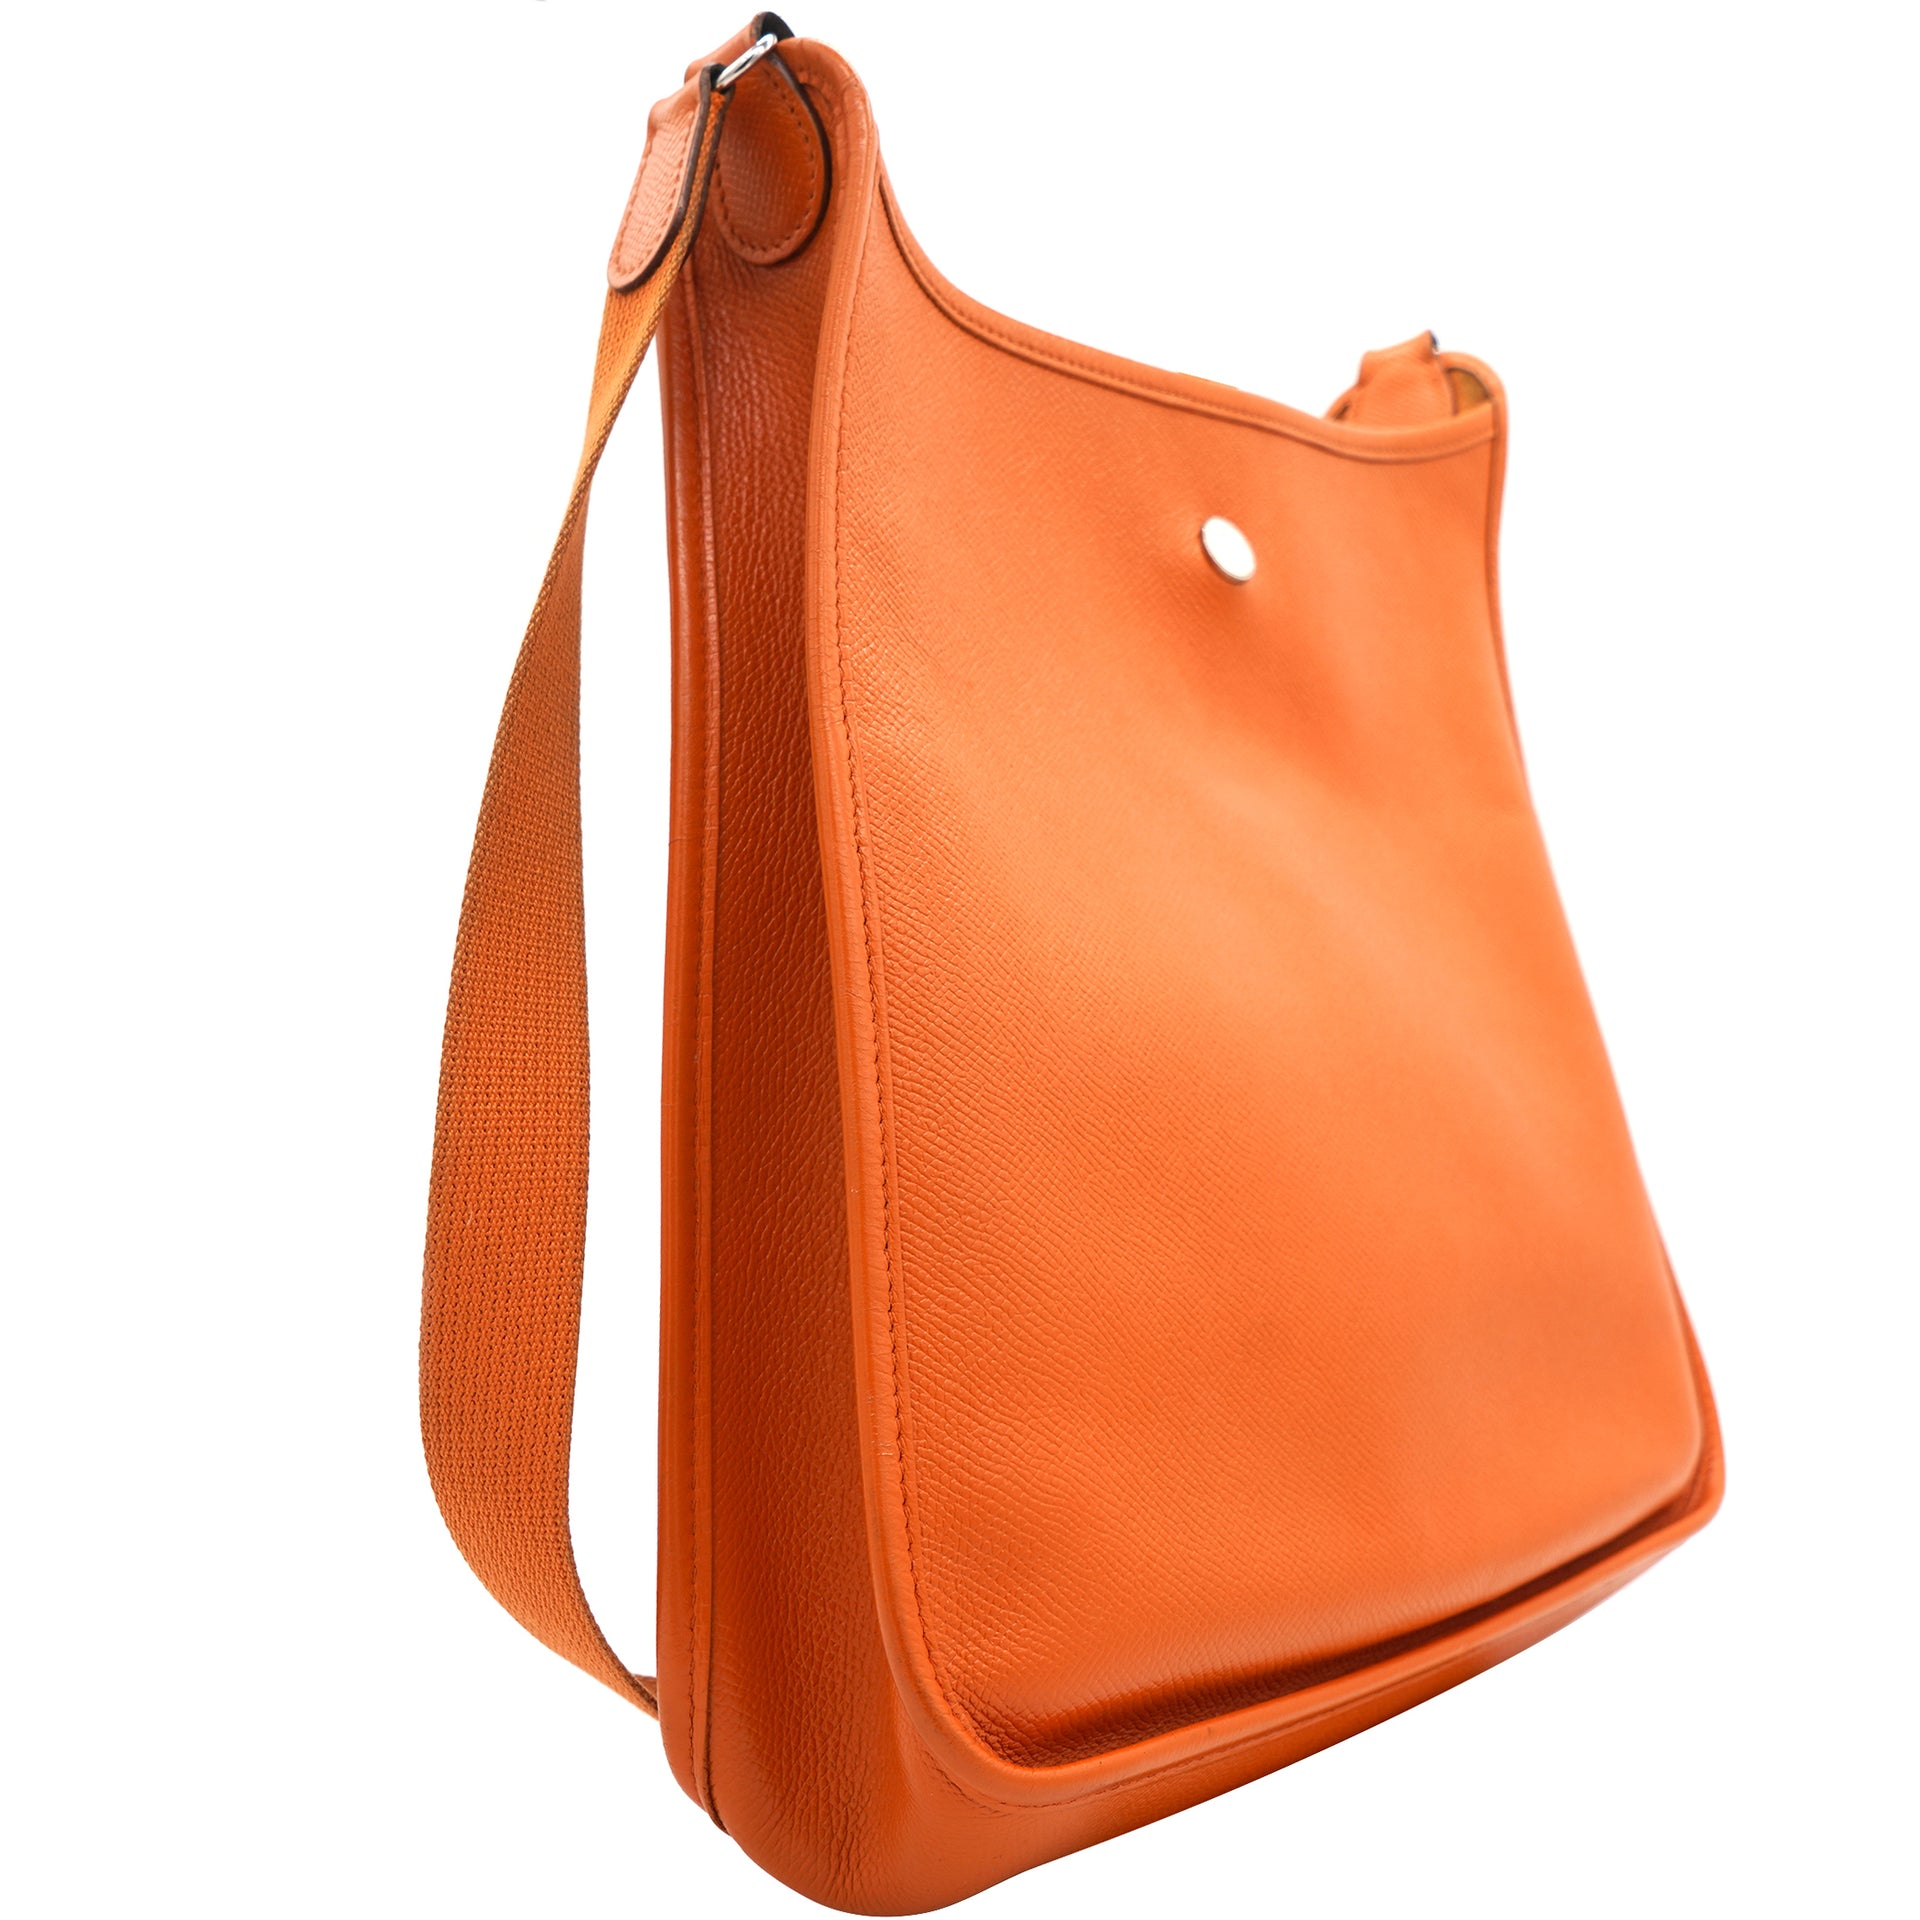 Auth HERMES Aline Mini Crossbody Shoulder Bag Orange Leather